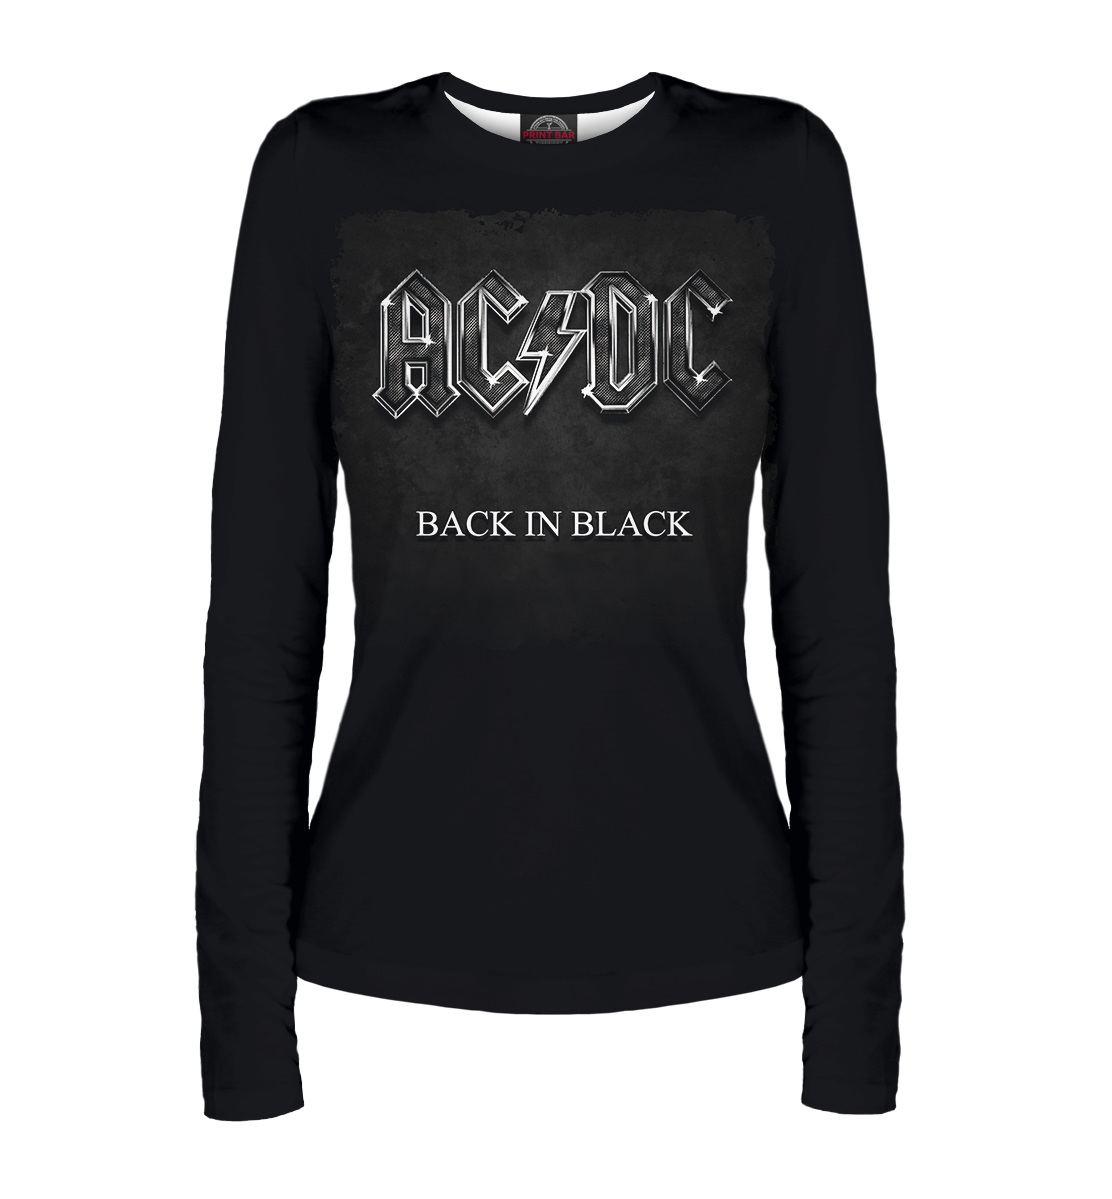 Фото - Back in black — AC/DC ac dc black ice